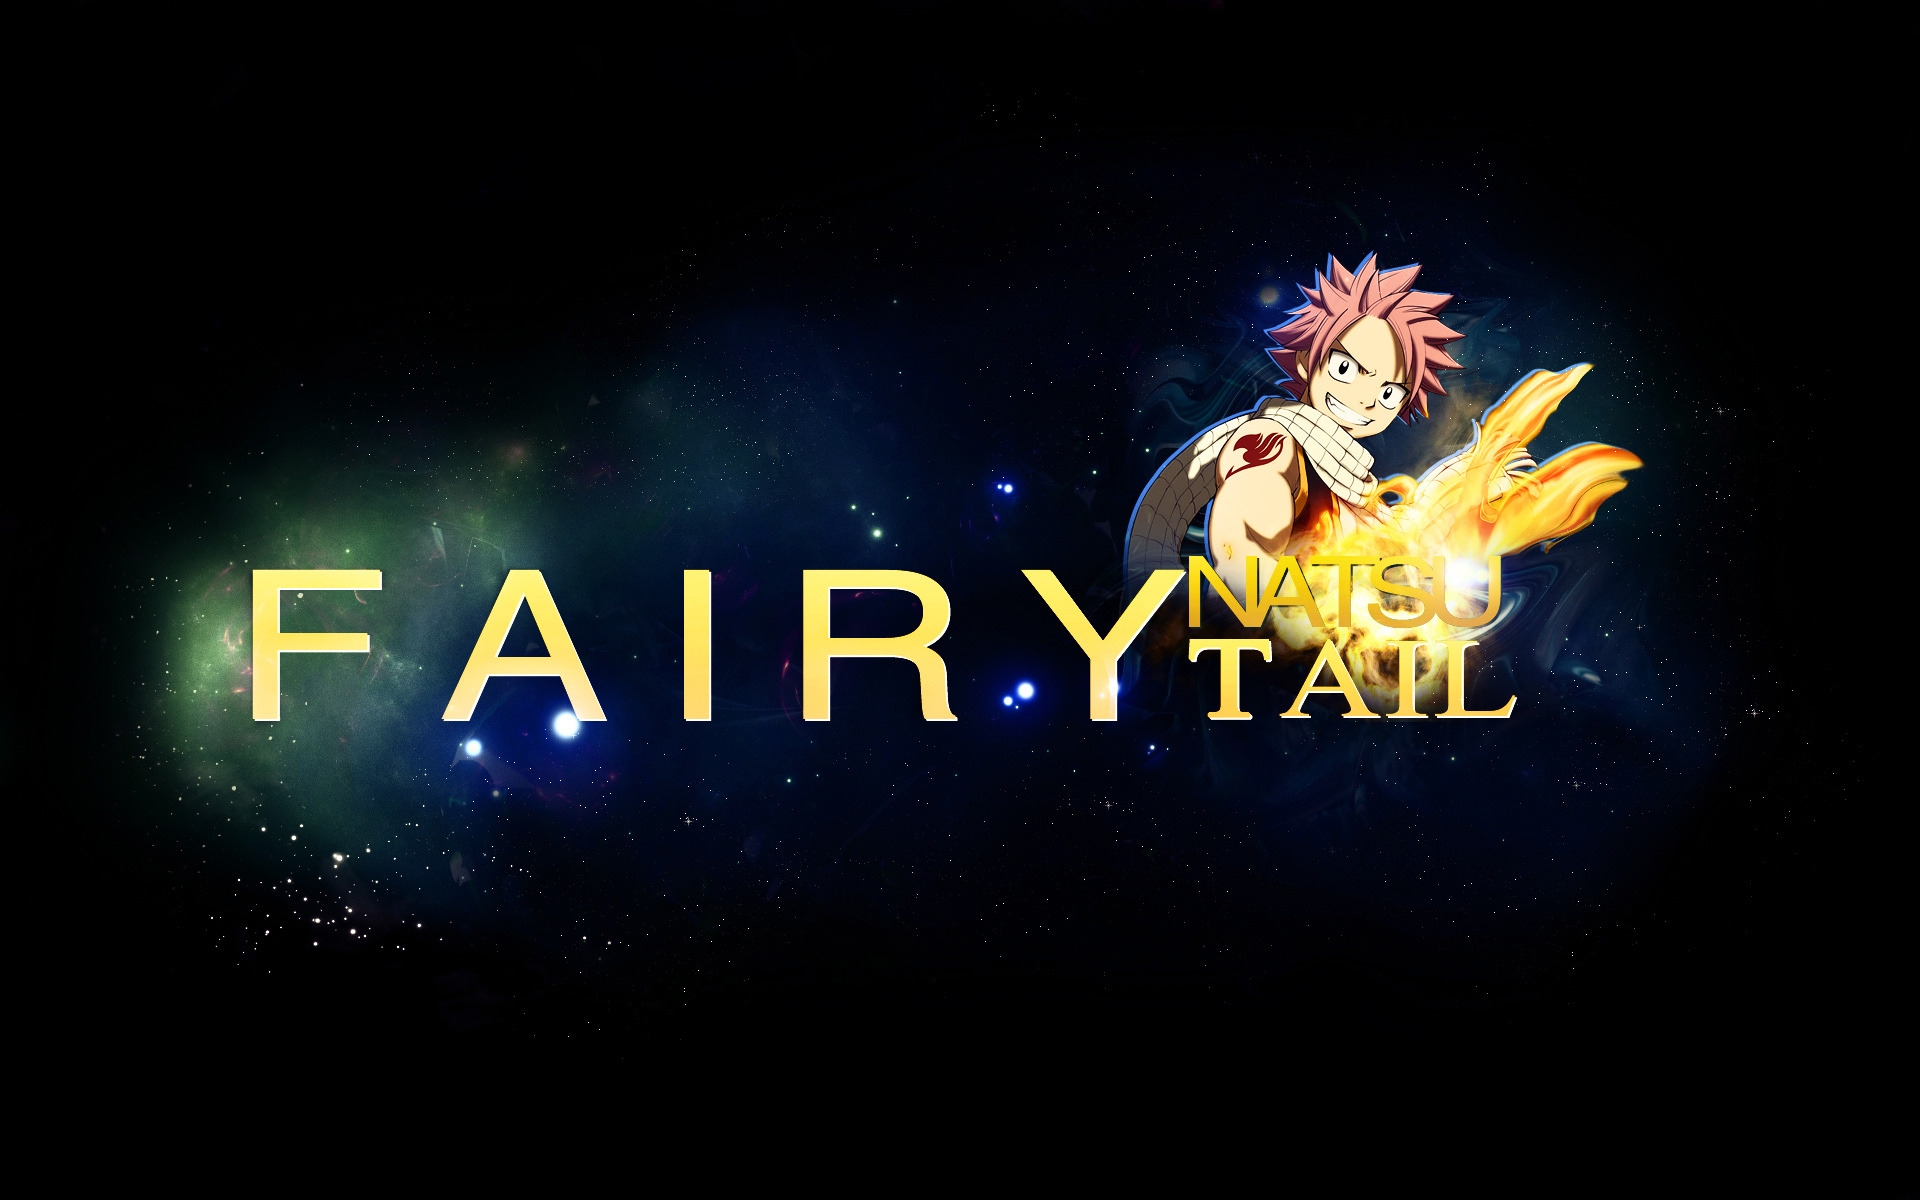 Fairy Tail Natsu for 1920 x 1200 widescreen resolution